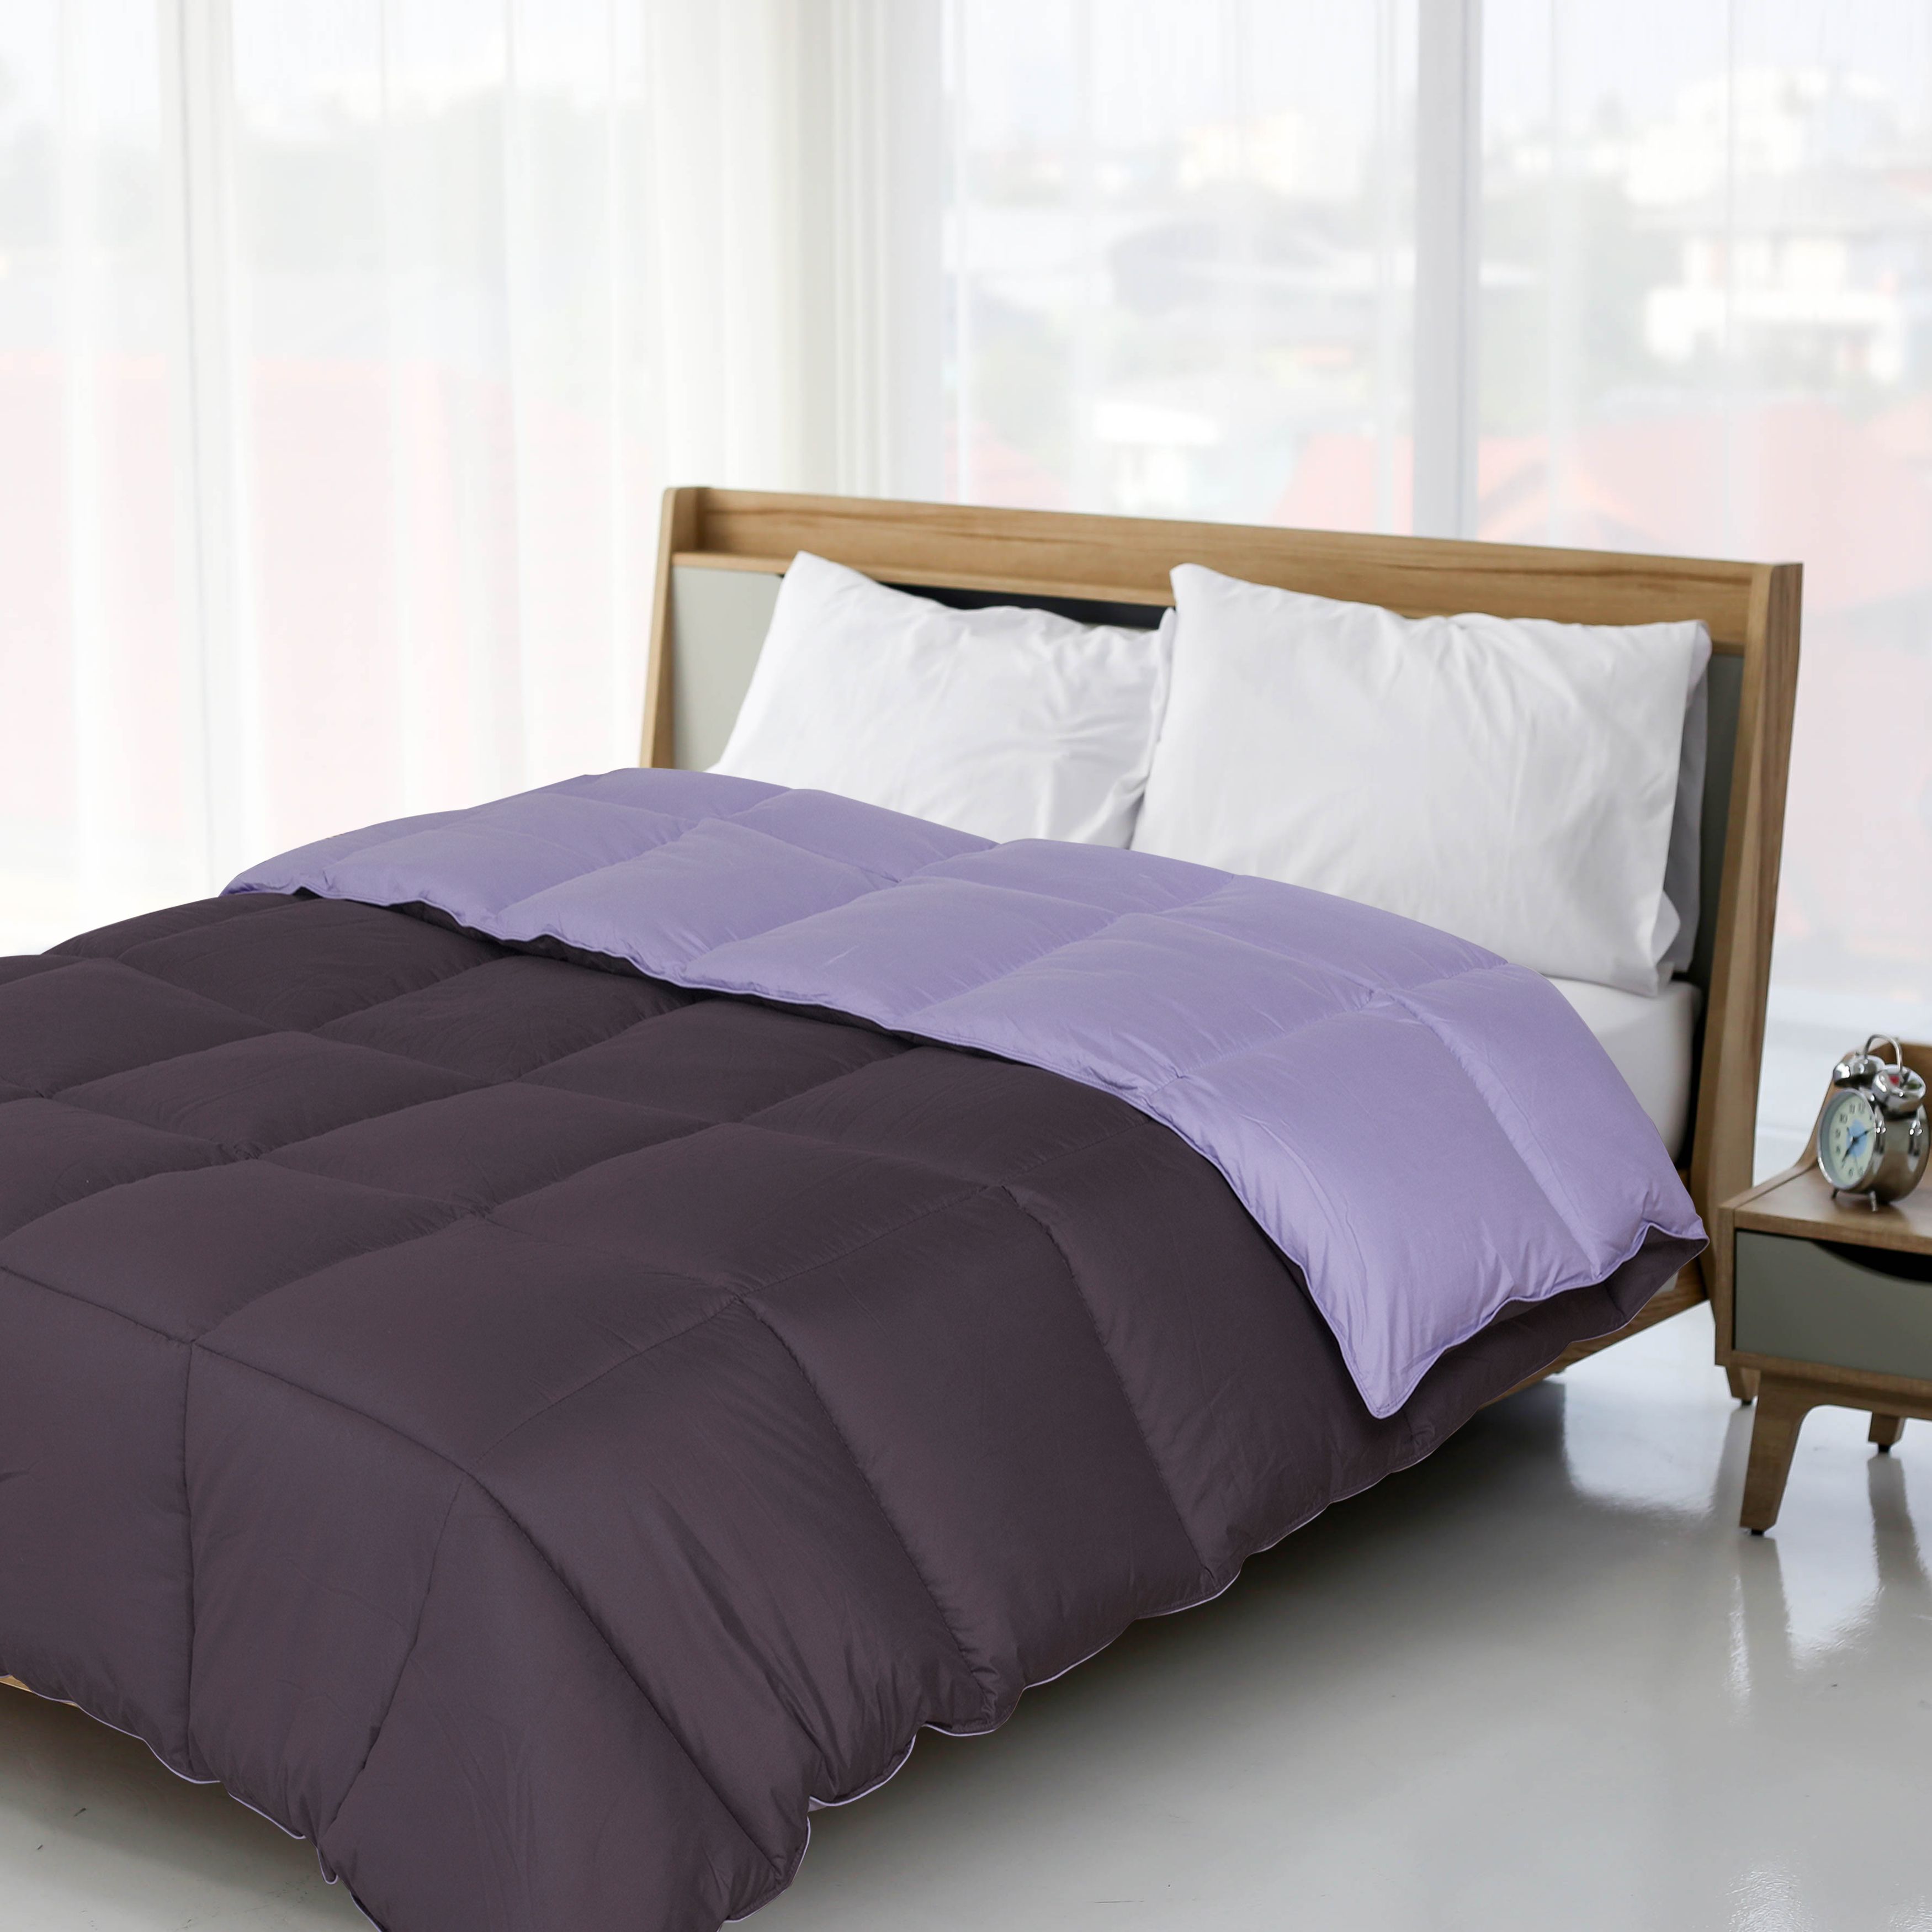 Superior Down Alternative Reversible Comforter, Full/ Queen, Plum/ Lilac - image 2 of 3